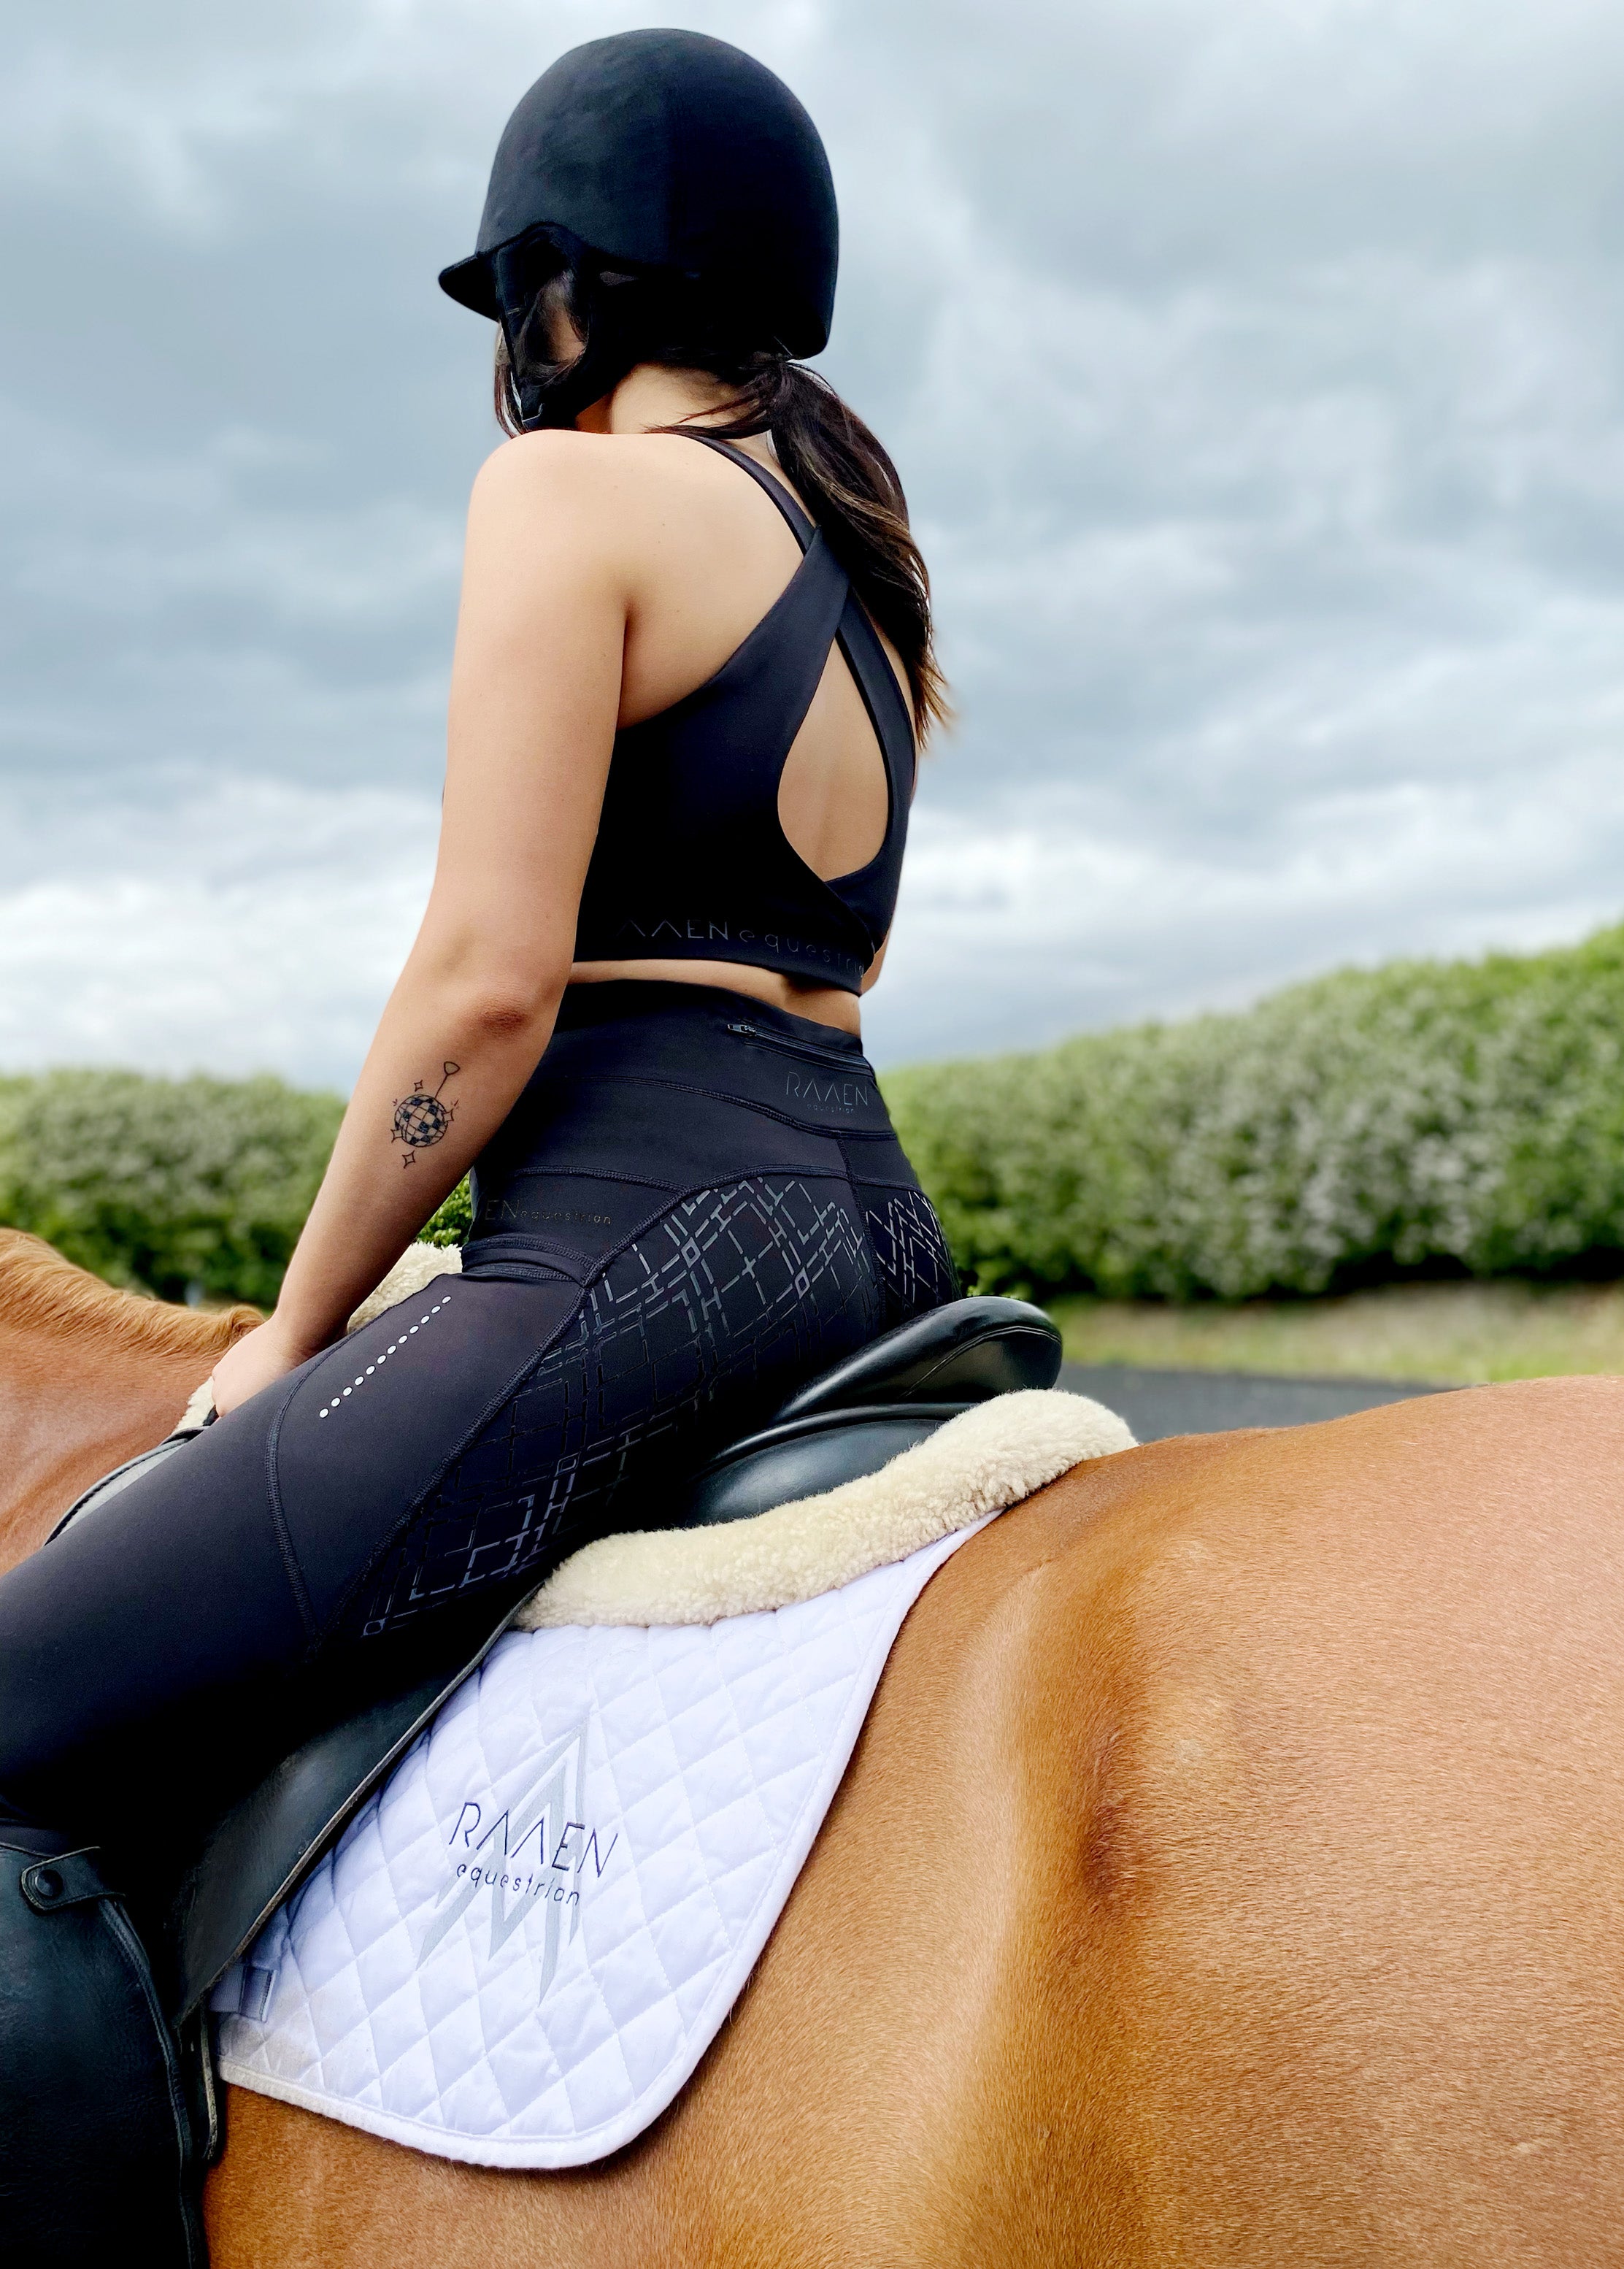 Equestrian Clothing and Athleisure – Raaen Equestrian